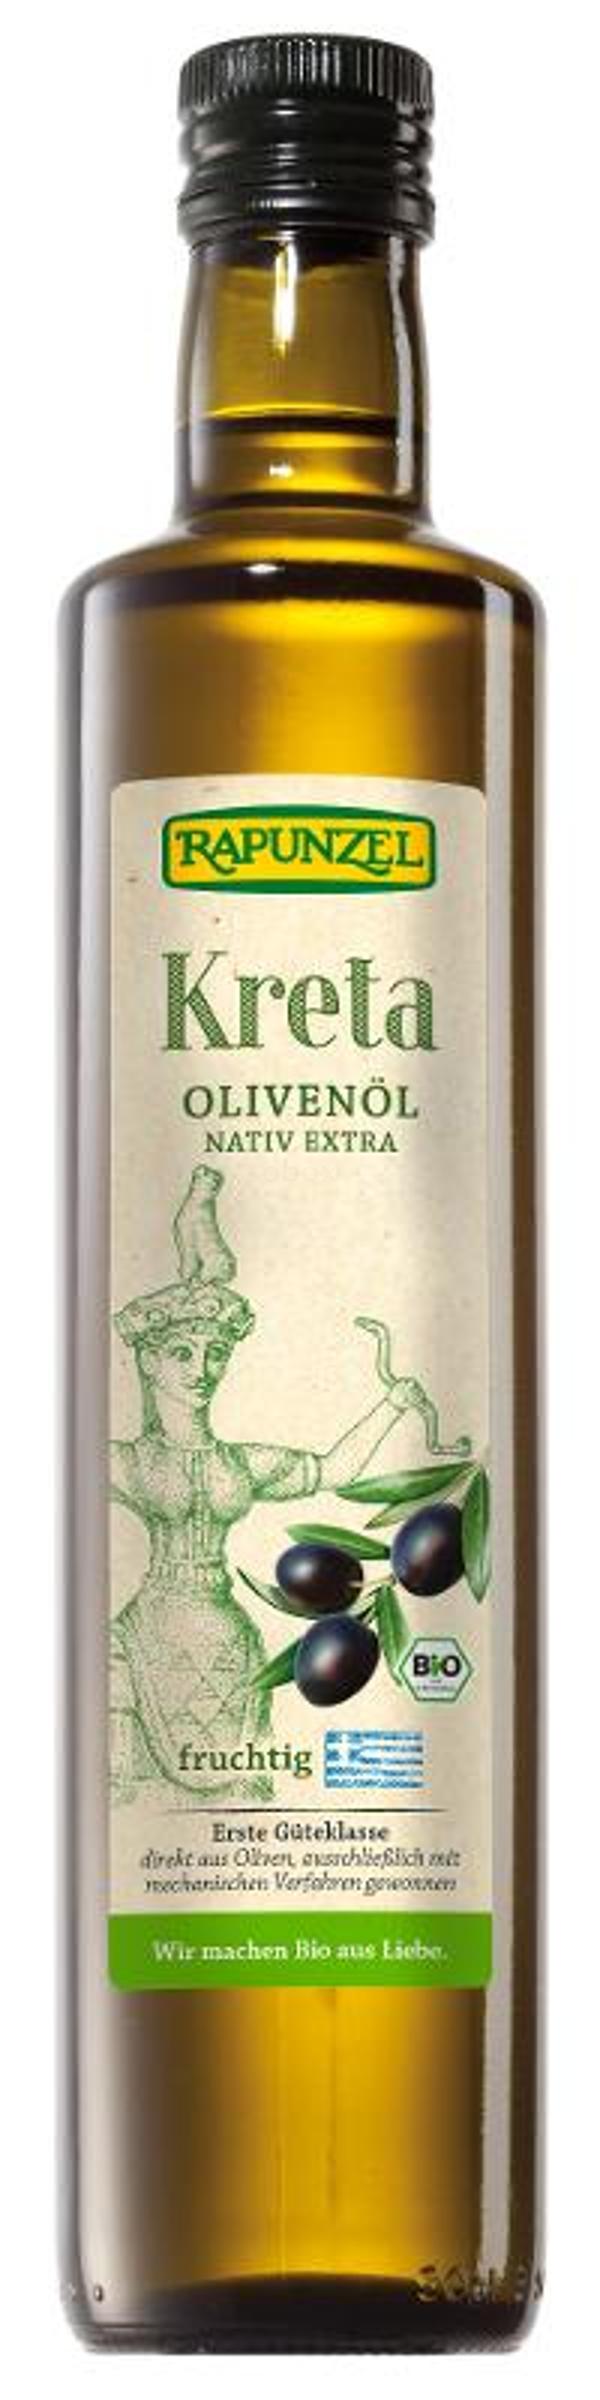 Produktfoto zu Olivenöl Kreta 0,5 l